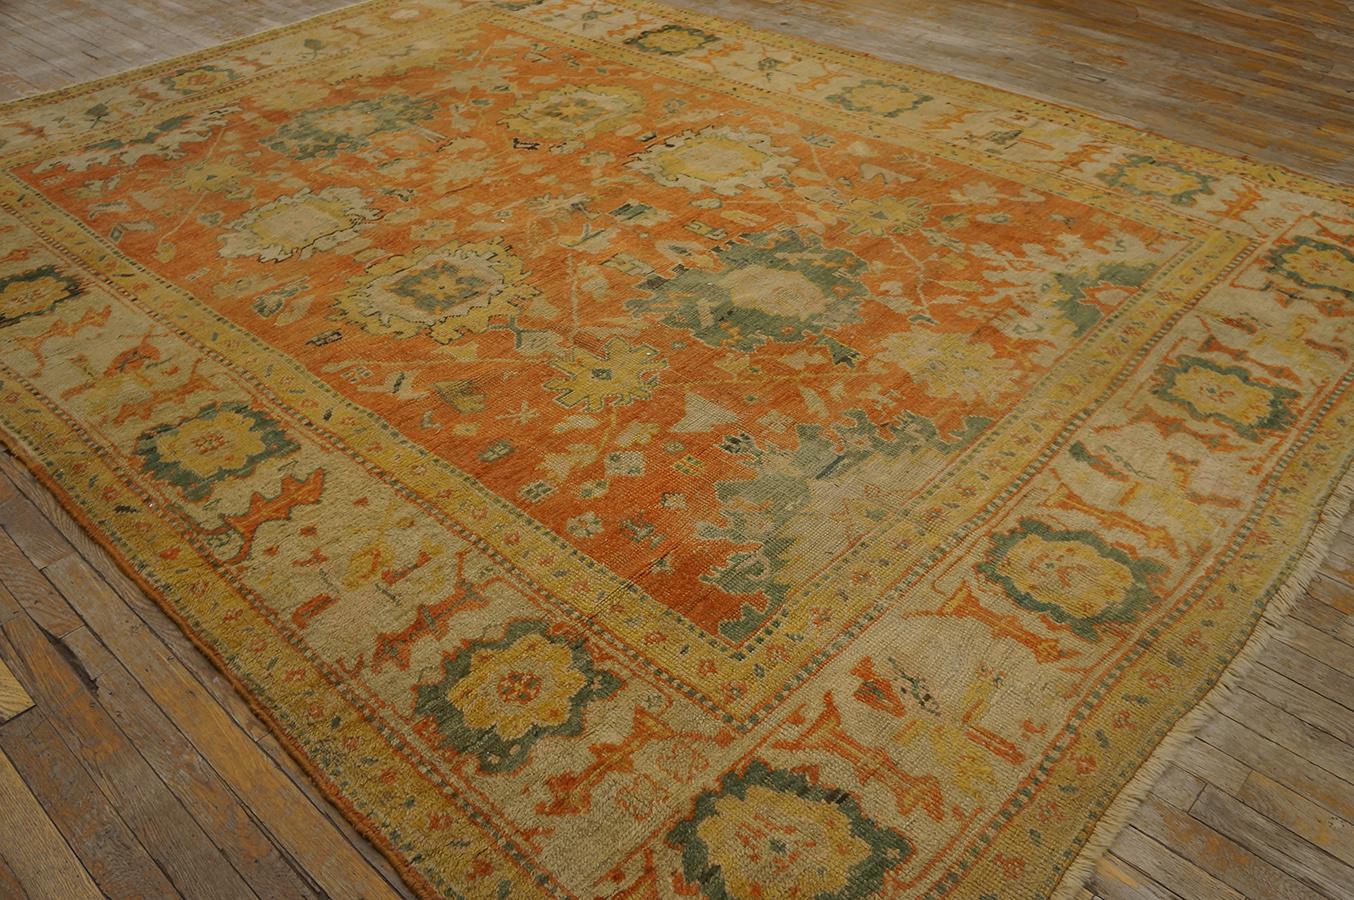 Late 19th Century Turkish Anatolian Oushak Carpet (8'4''x 11'2'' - 254 x 340 cm) For Sale 6